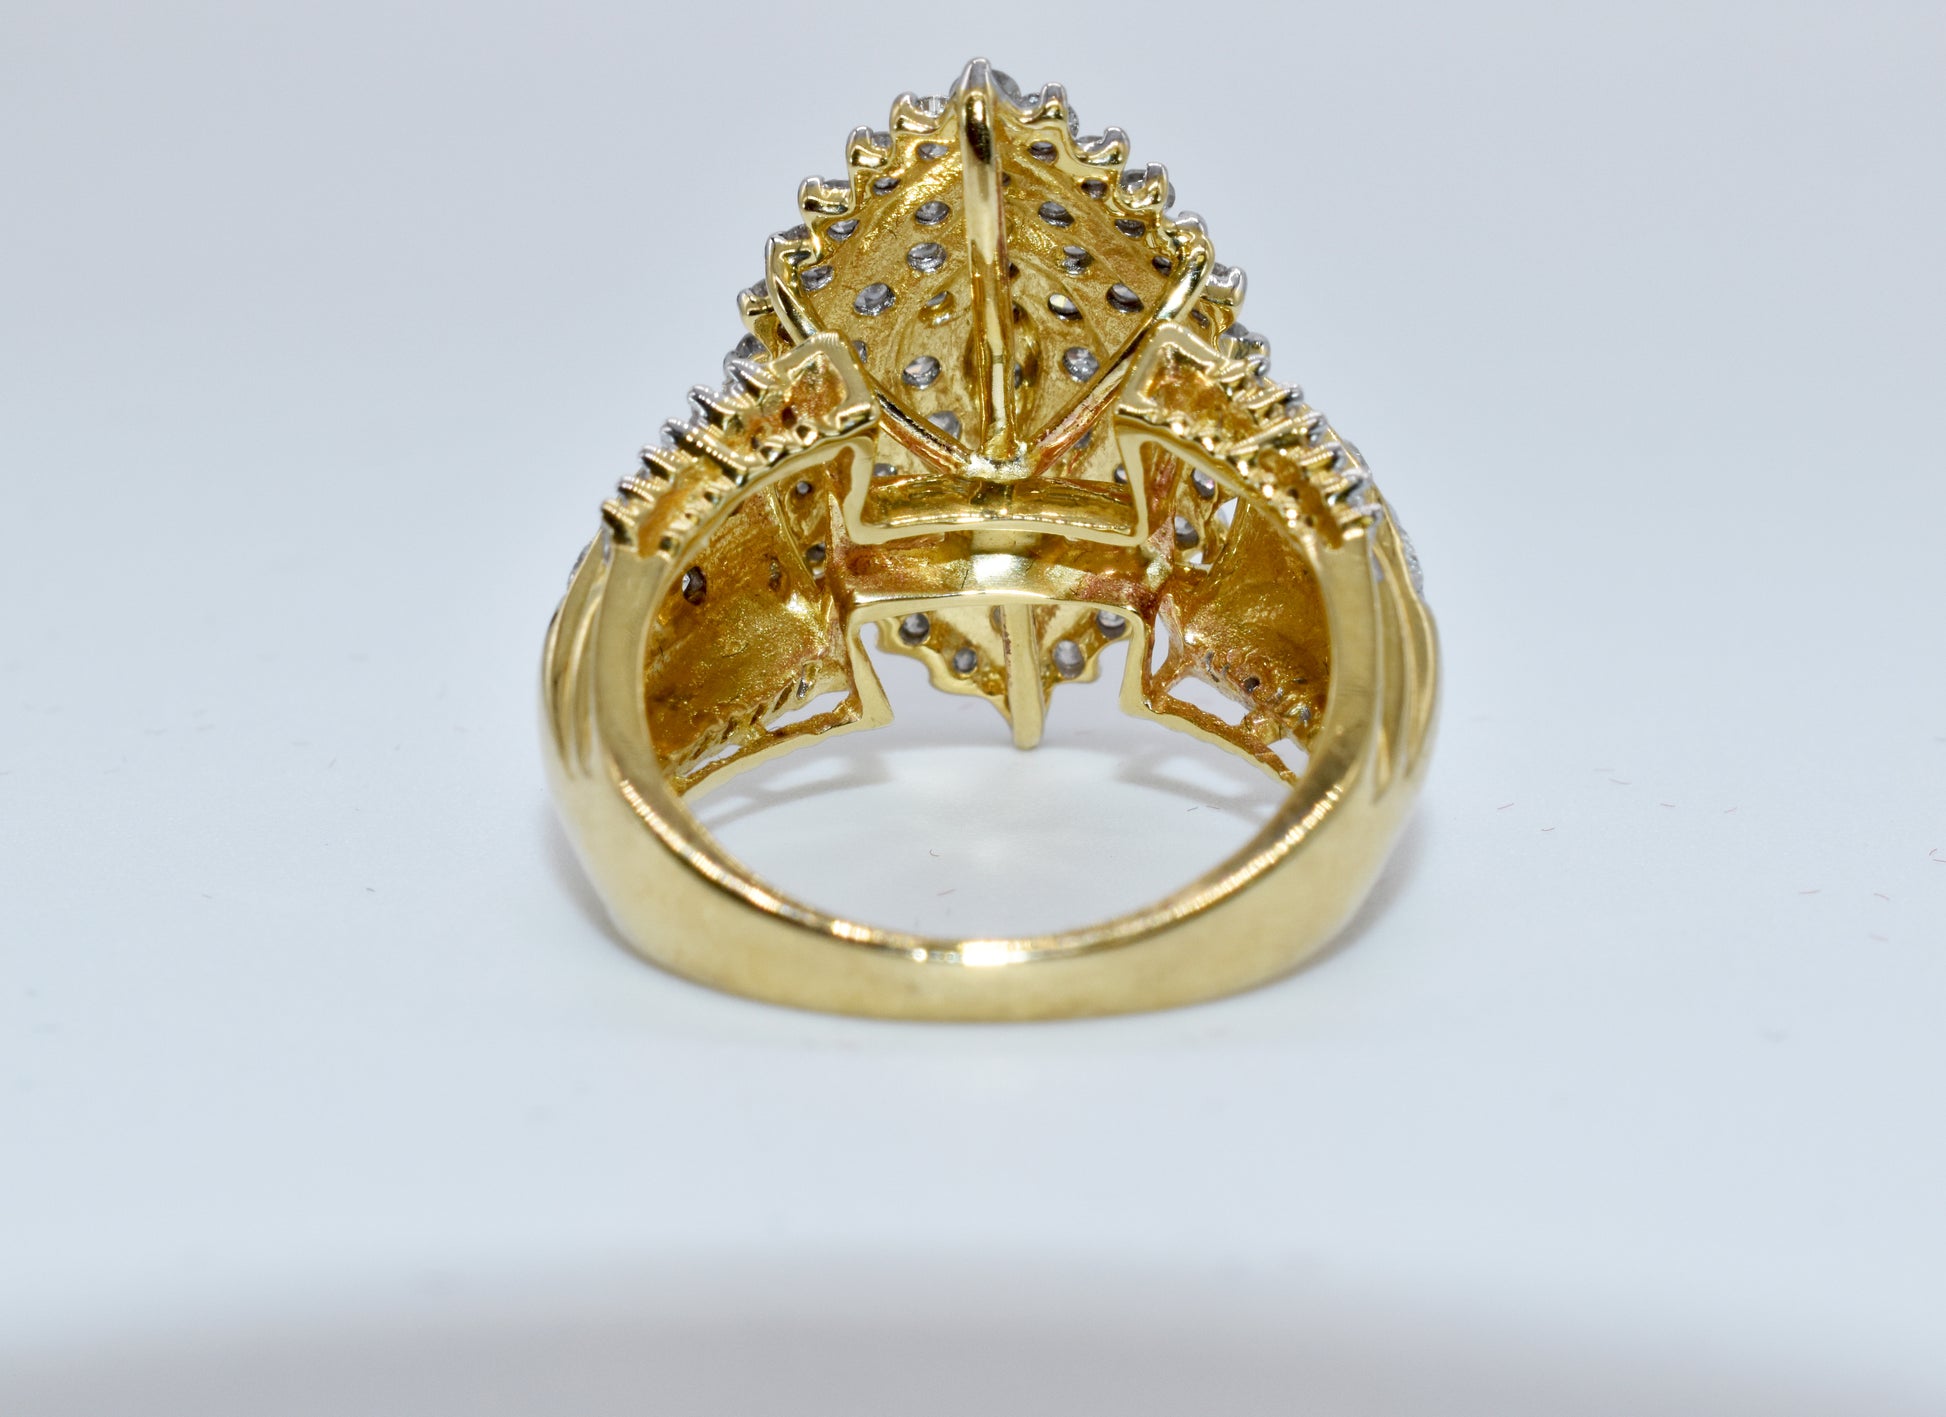 Engagement ring almond shape 10k Italian gold with diamonds. 